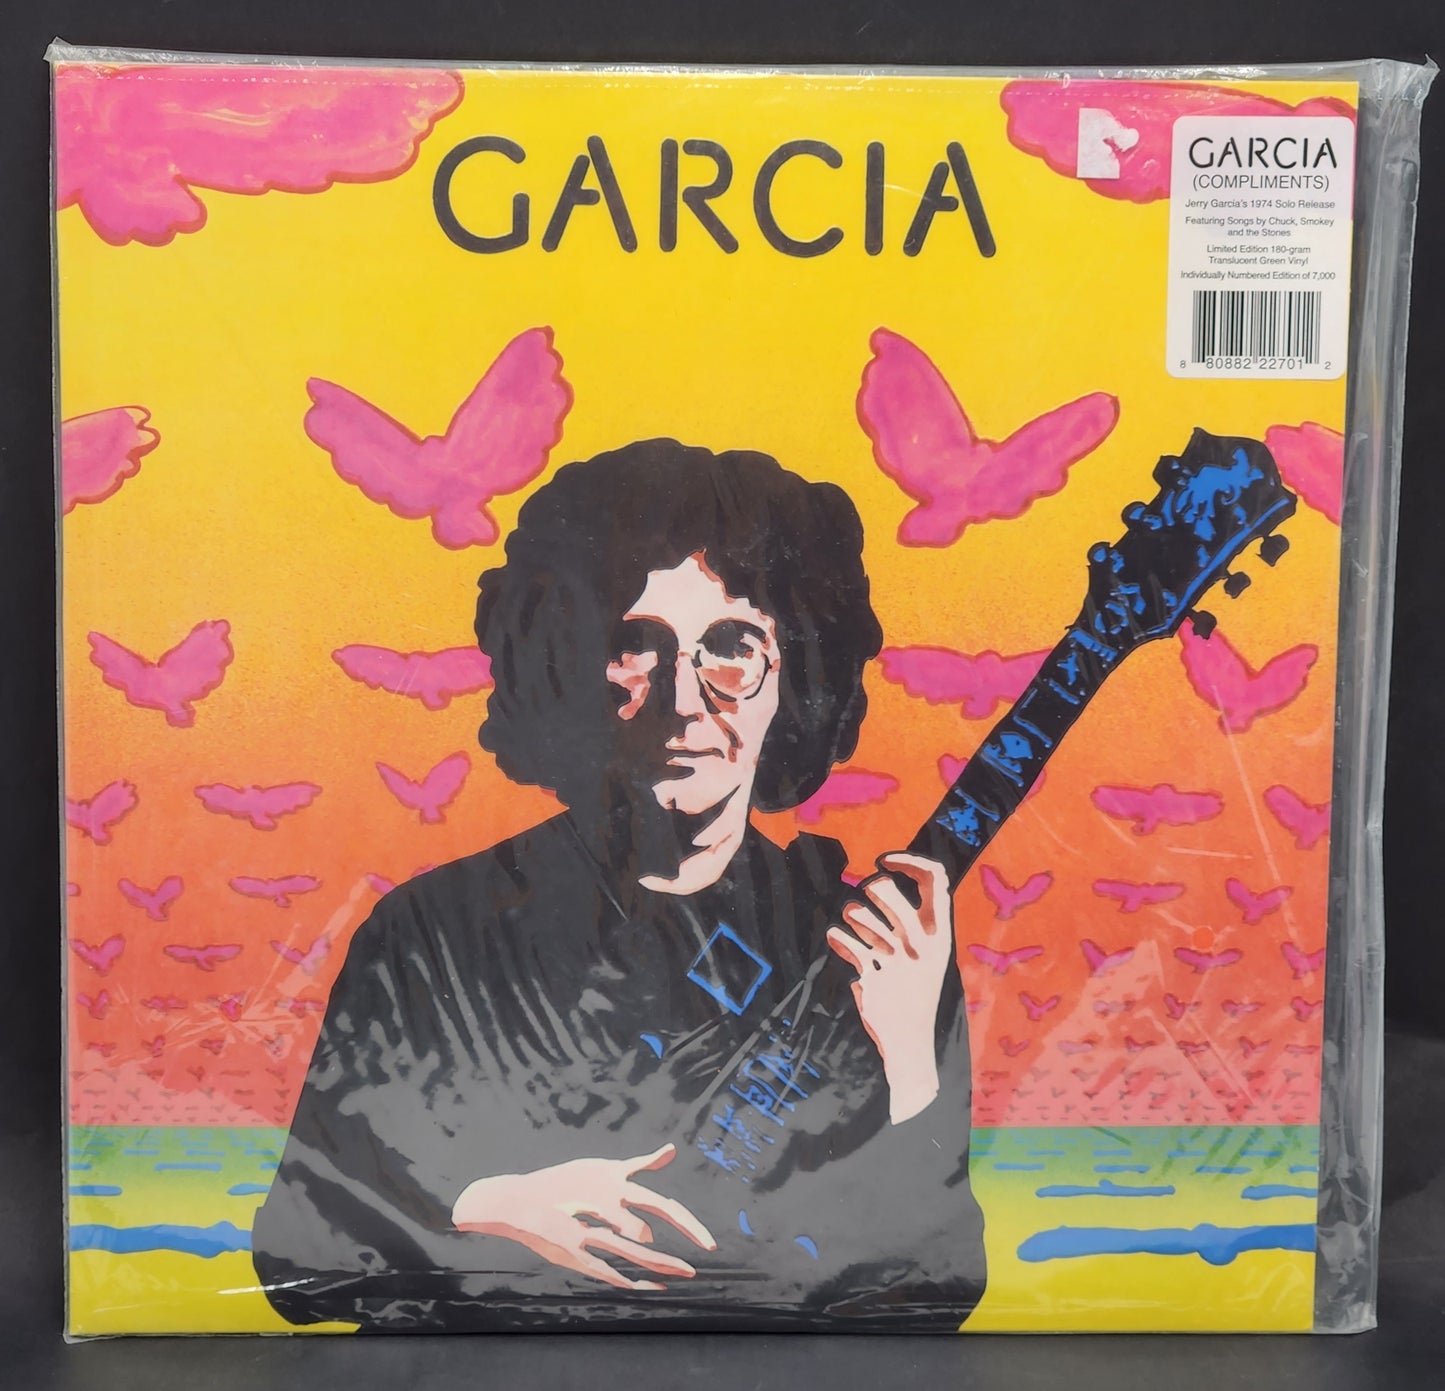 SEALED Jerry Garcia "Garcia (Compliments)" Folk Rock 2015 Limited Edition Record (Green Vinyl)